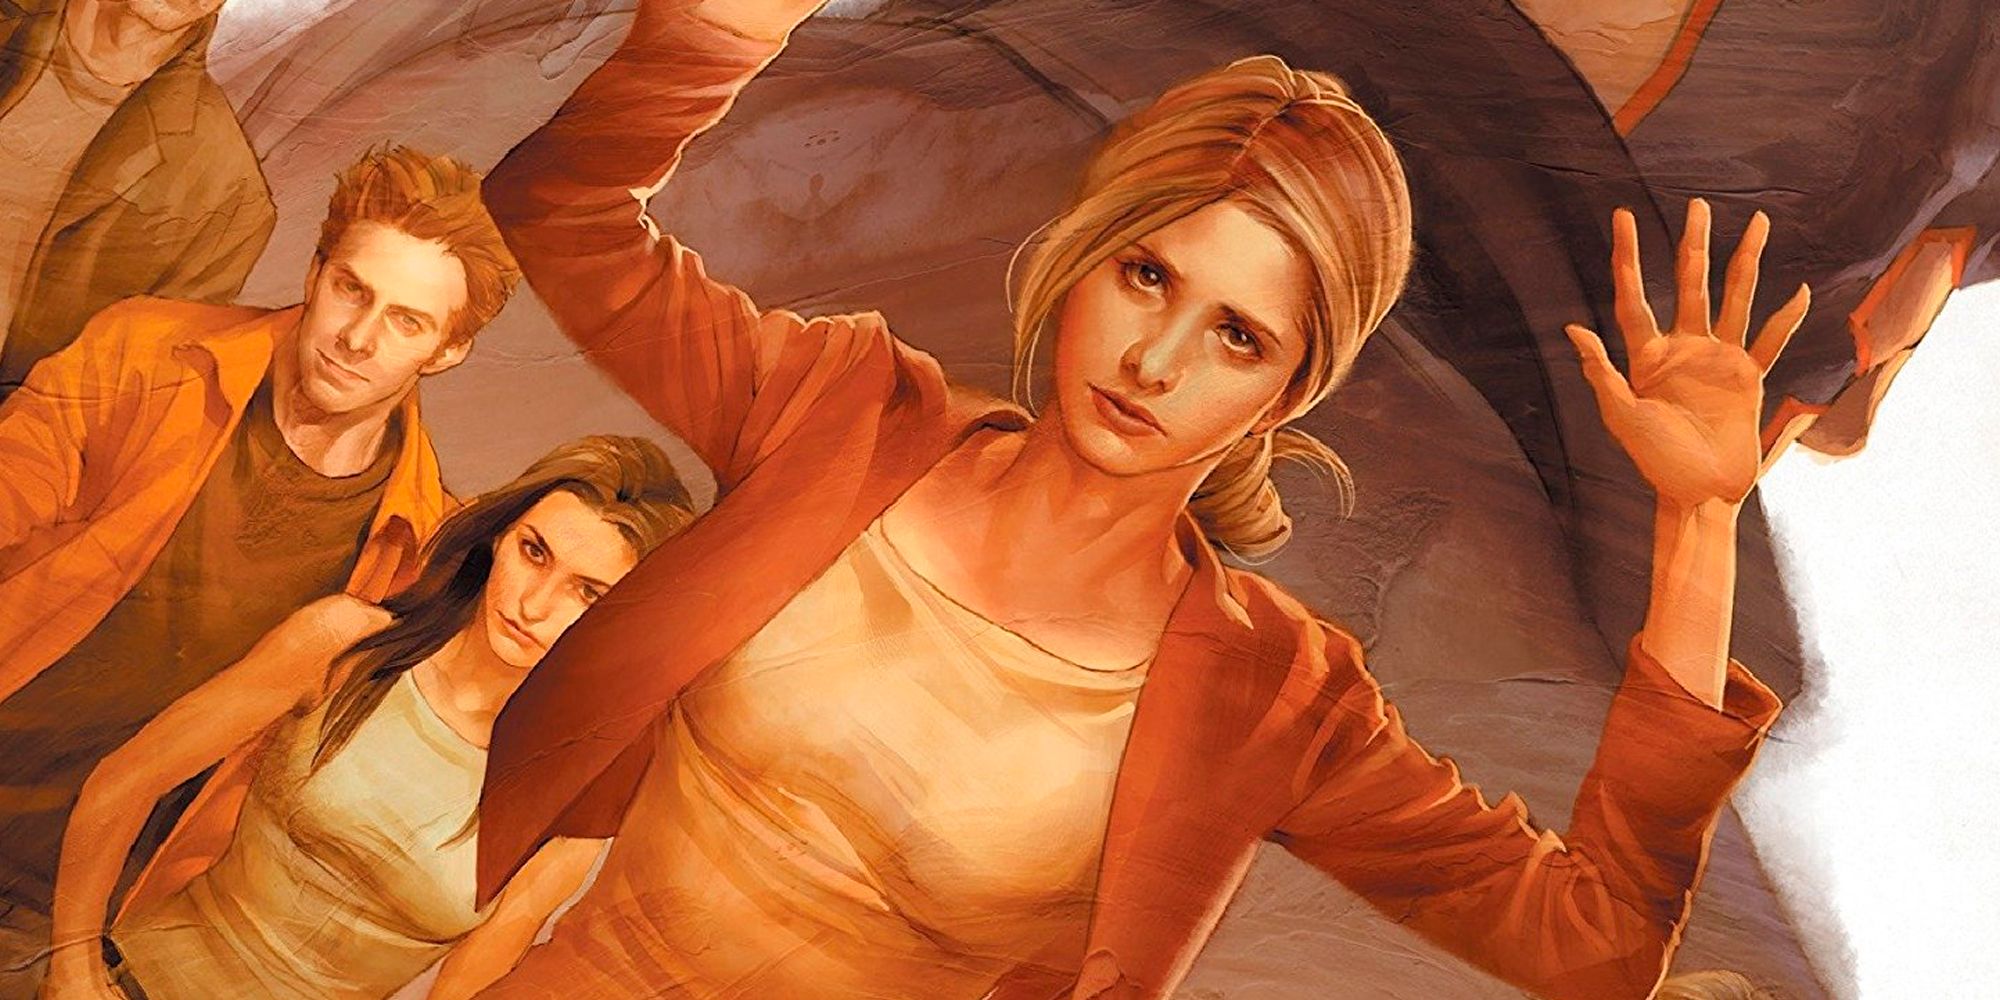 Buffy and friends face Twilight in Buffy the Vampire Slayer comic season 8